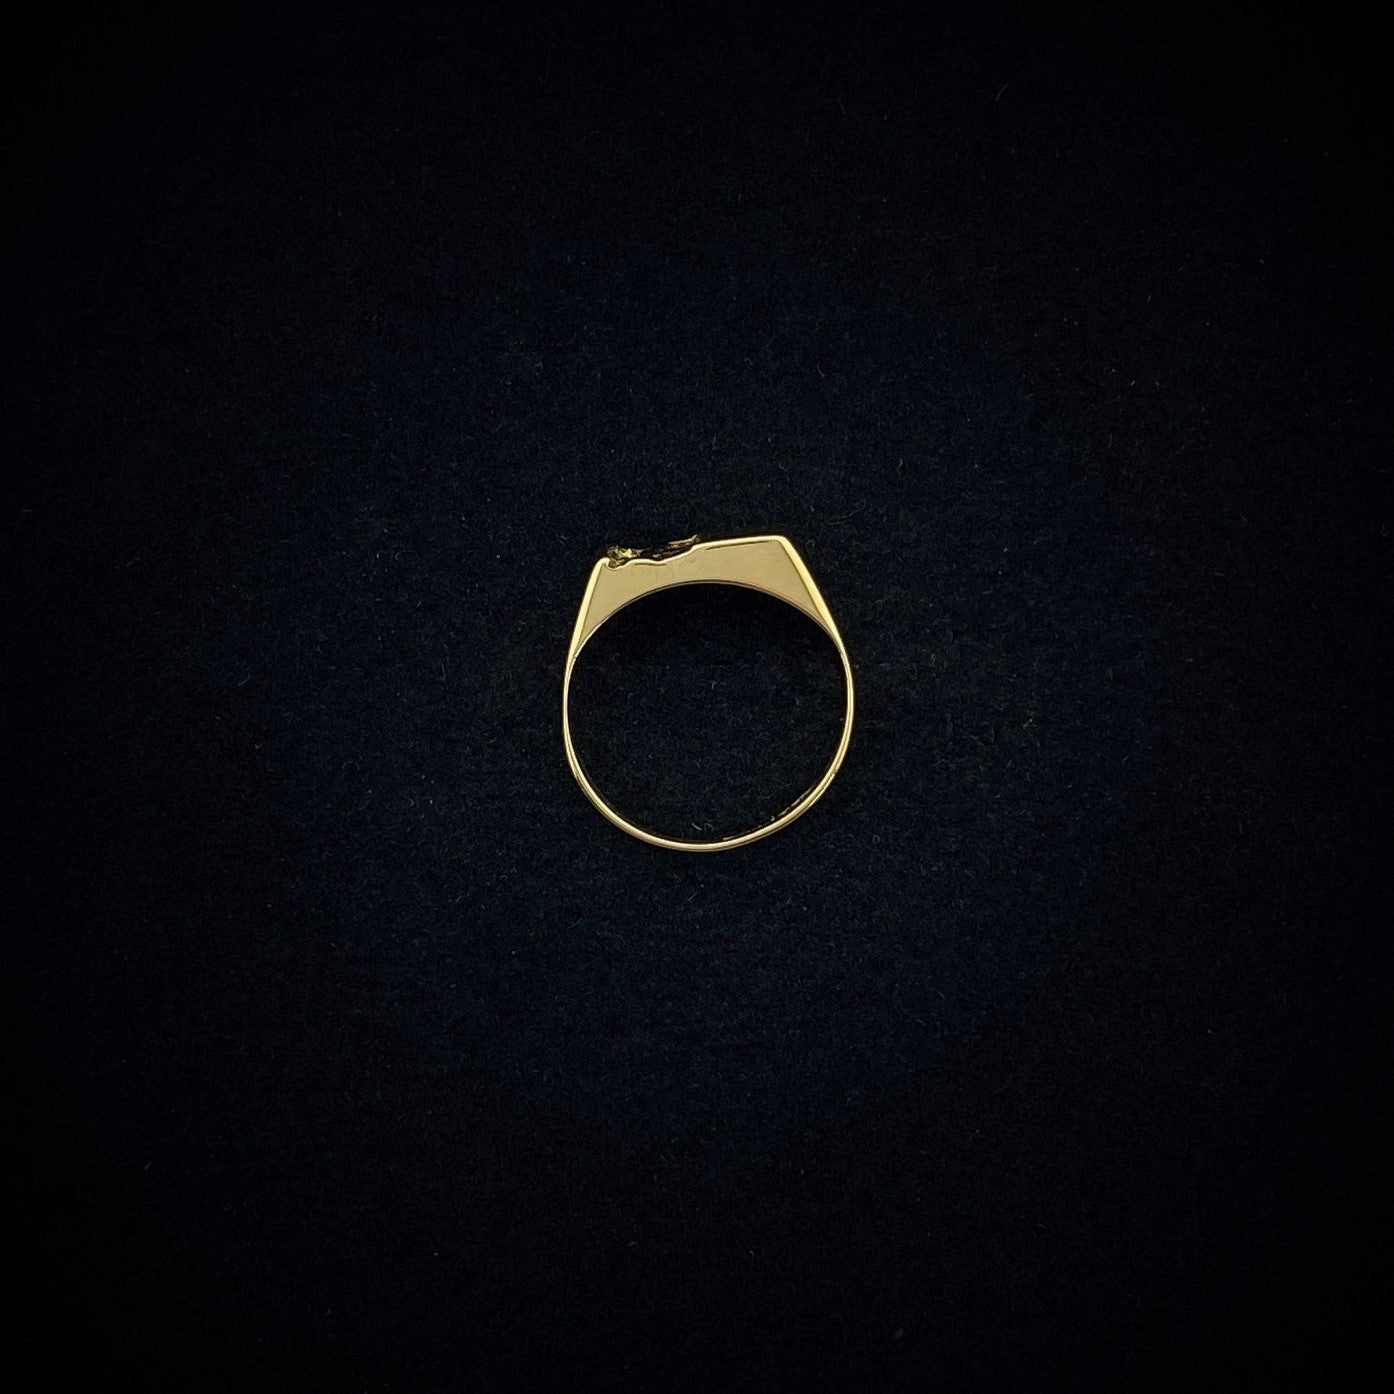 Vintage ring gult gull organisk design